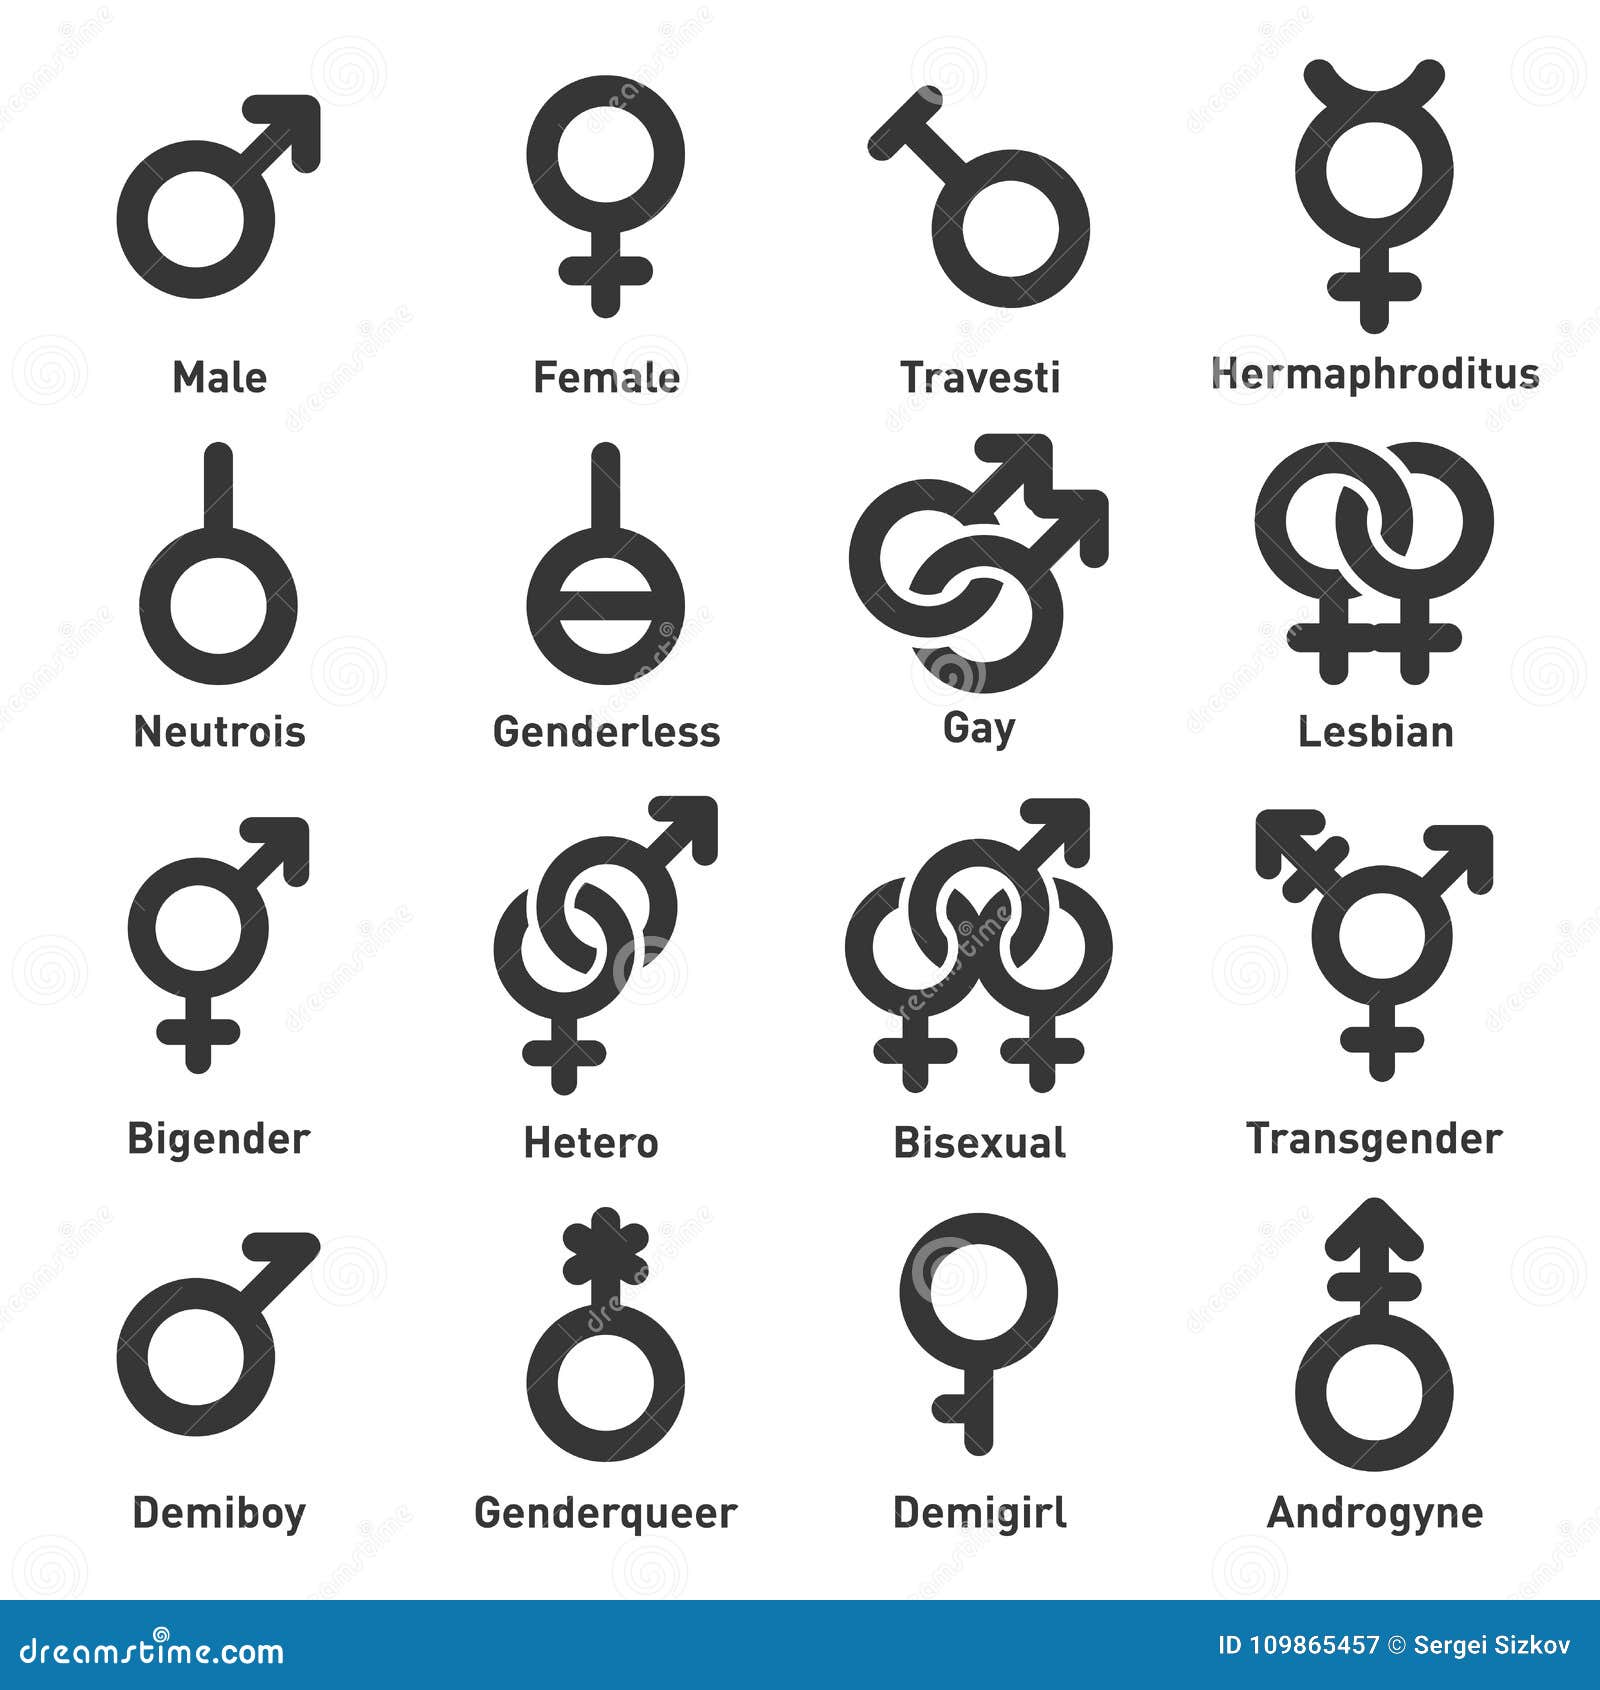 gender icons set on white background. 